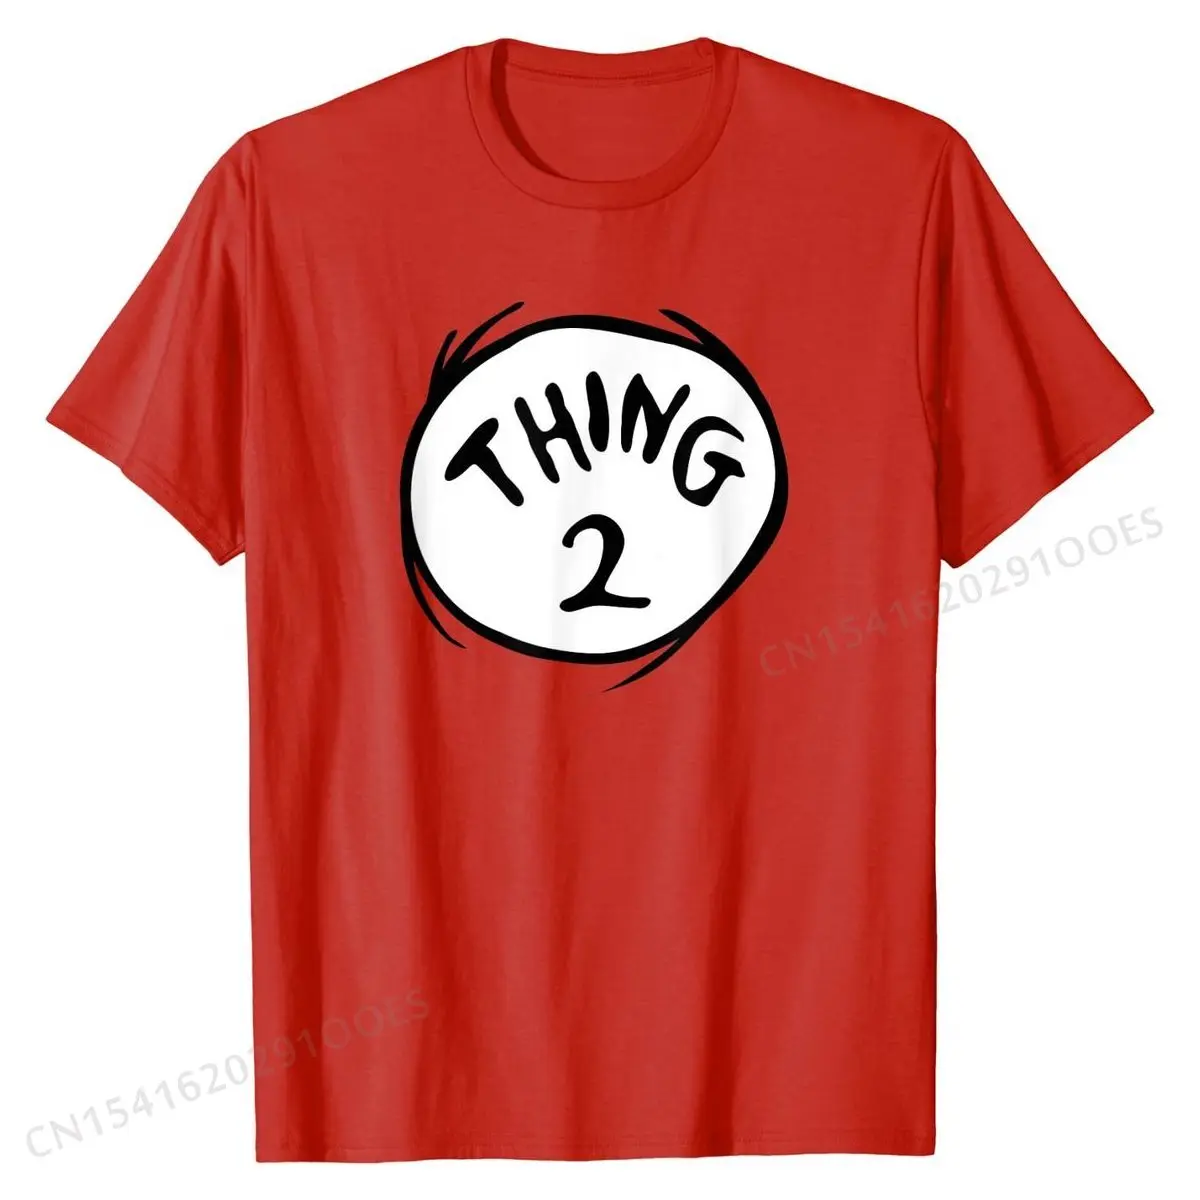 Thing 2 Emblem RED T-shirt T-Shirt Cotton Top T-shirts for Men Printed Tops Tees Faddish Printed